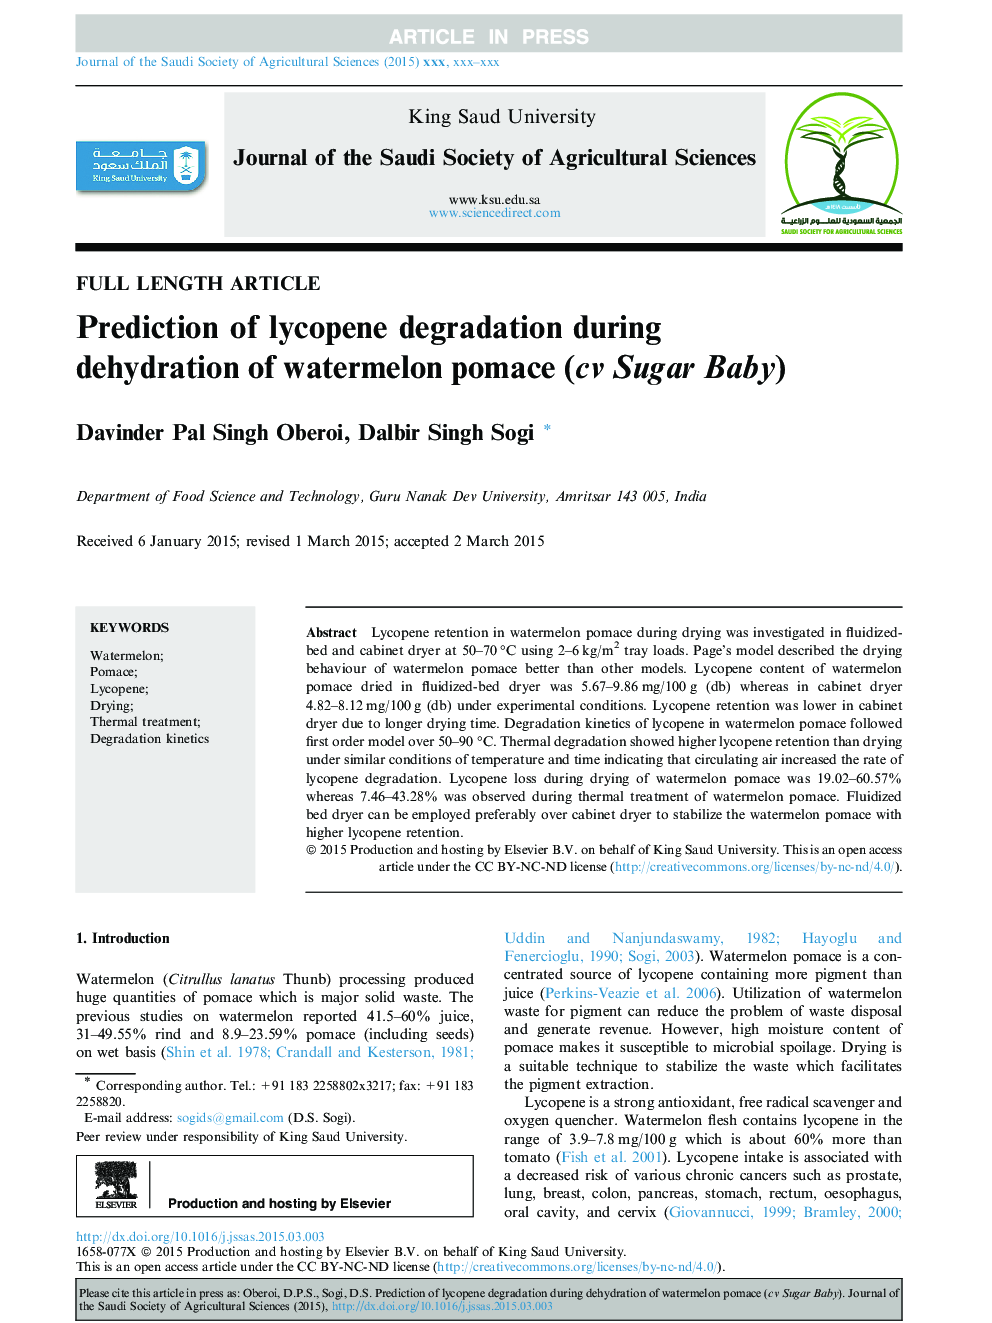 Prediction of lycopene degradation during dehydration of watermelon pomace (cv Sugar Baby)